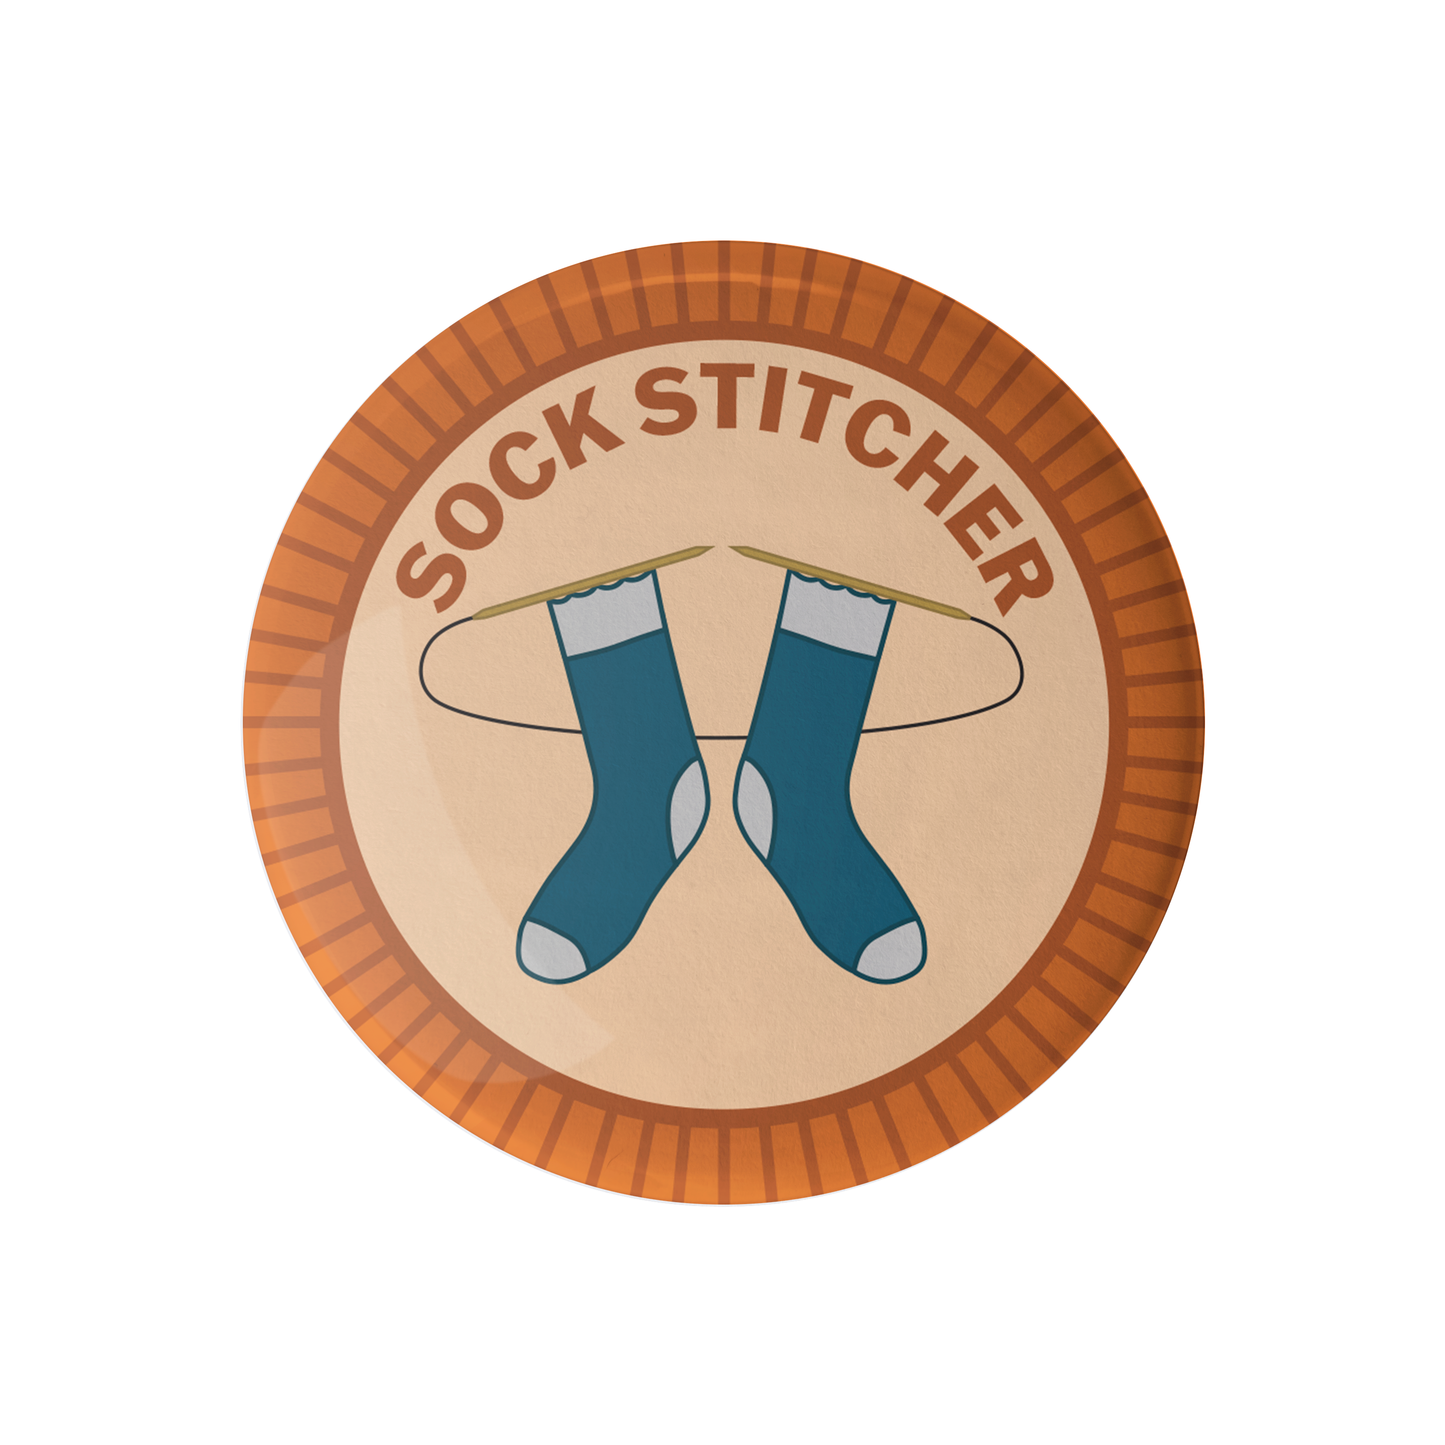 Sock Stitcher Knitting Merit Badge